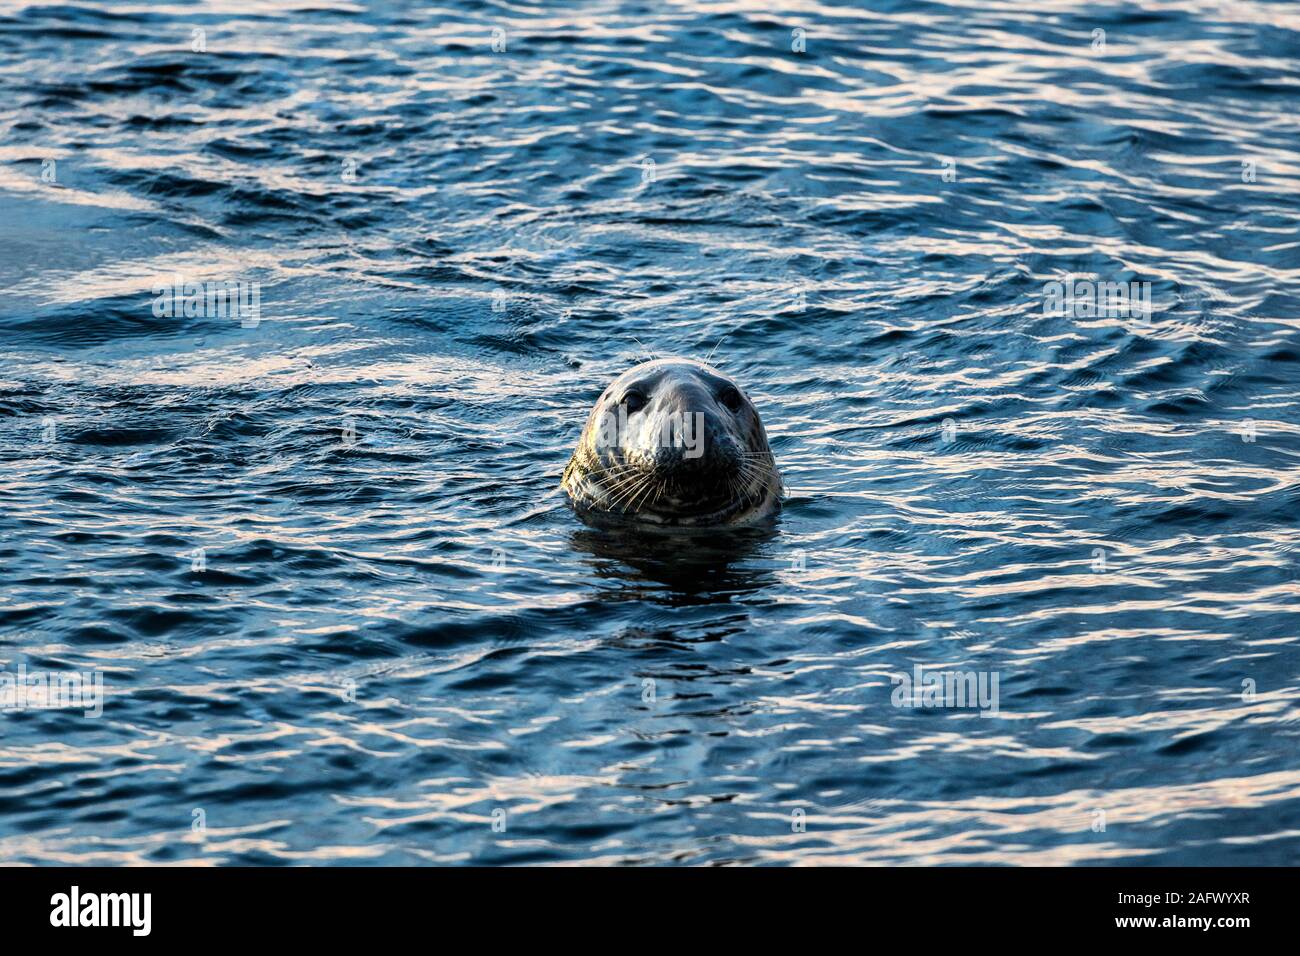 Harbor seal, Chatham, Cape Cod, Massachusetts, USA. Stock Photo